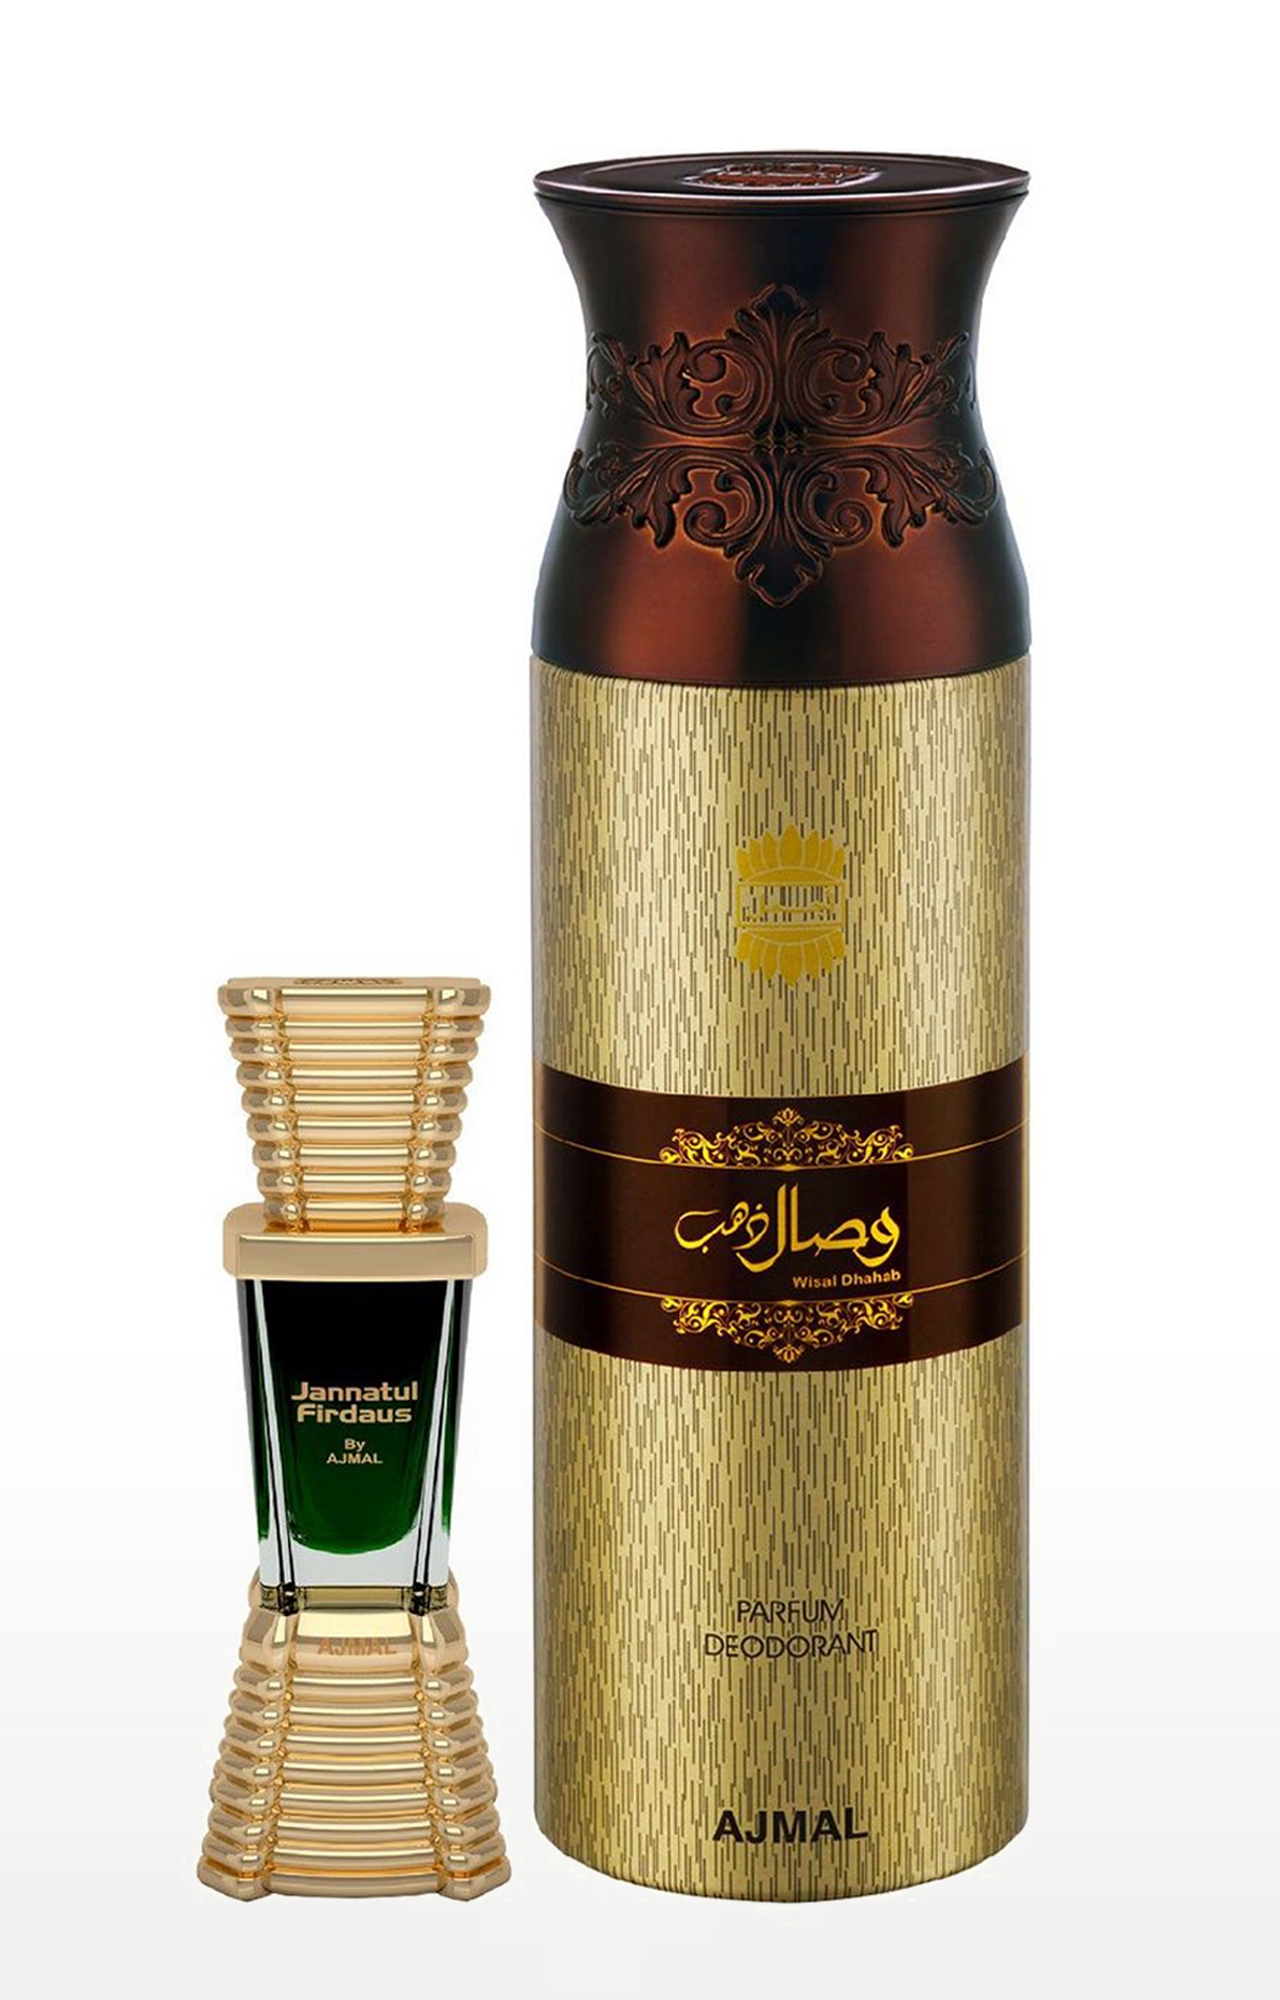 Ajmal | Ajmal Jannatul Firdaus Concentrated Perfume Oil Oriental Alcohol-free Attar 10ml for Unisex and Wisal Dhahab Deodorant Fruity Fragrance 200ml for Men